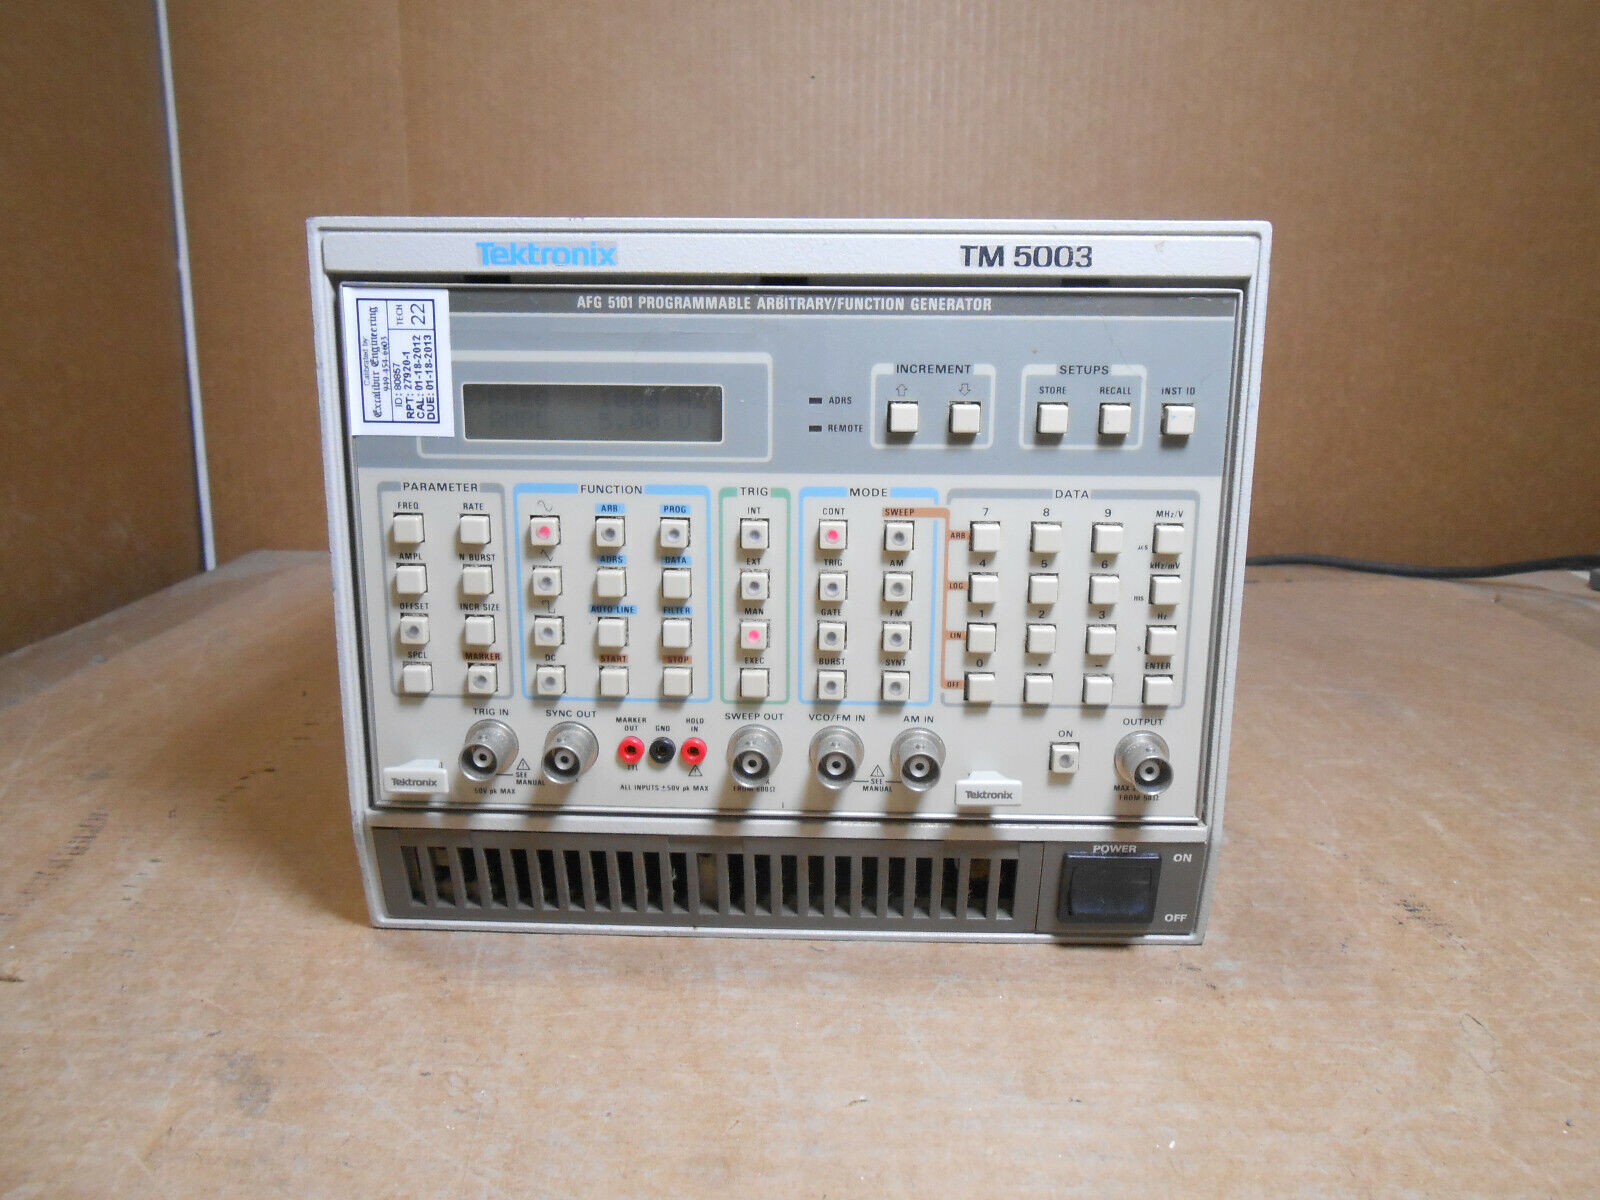 TEKTRONIX TM 5003 AFG 5101 PROGRAMMABLE ARBITRARY/FUNCTION GENERATOR